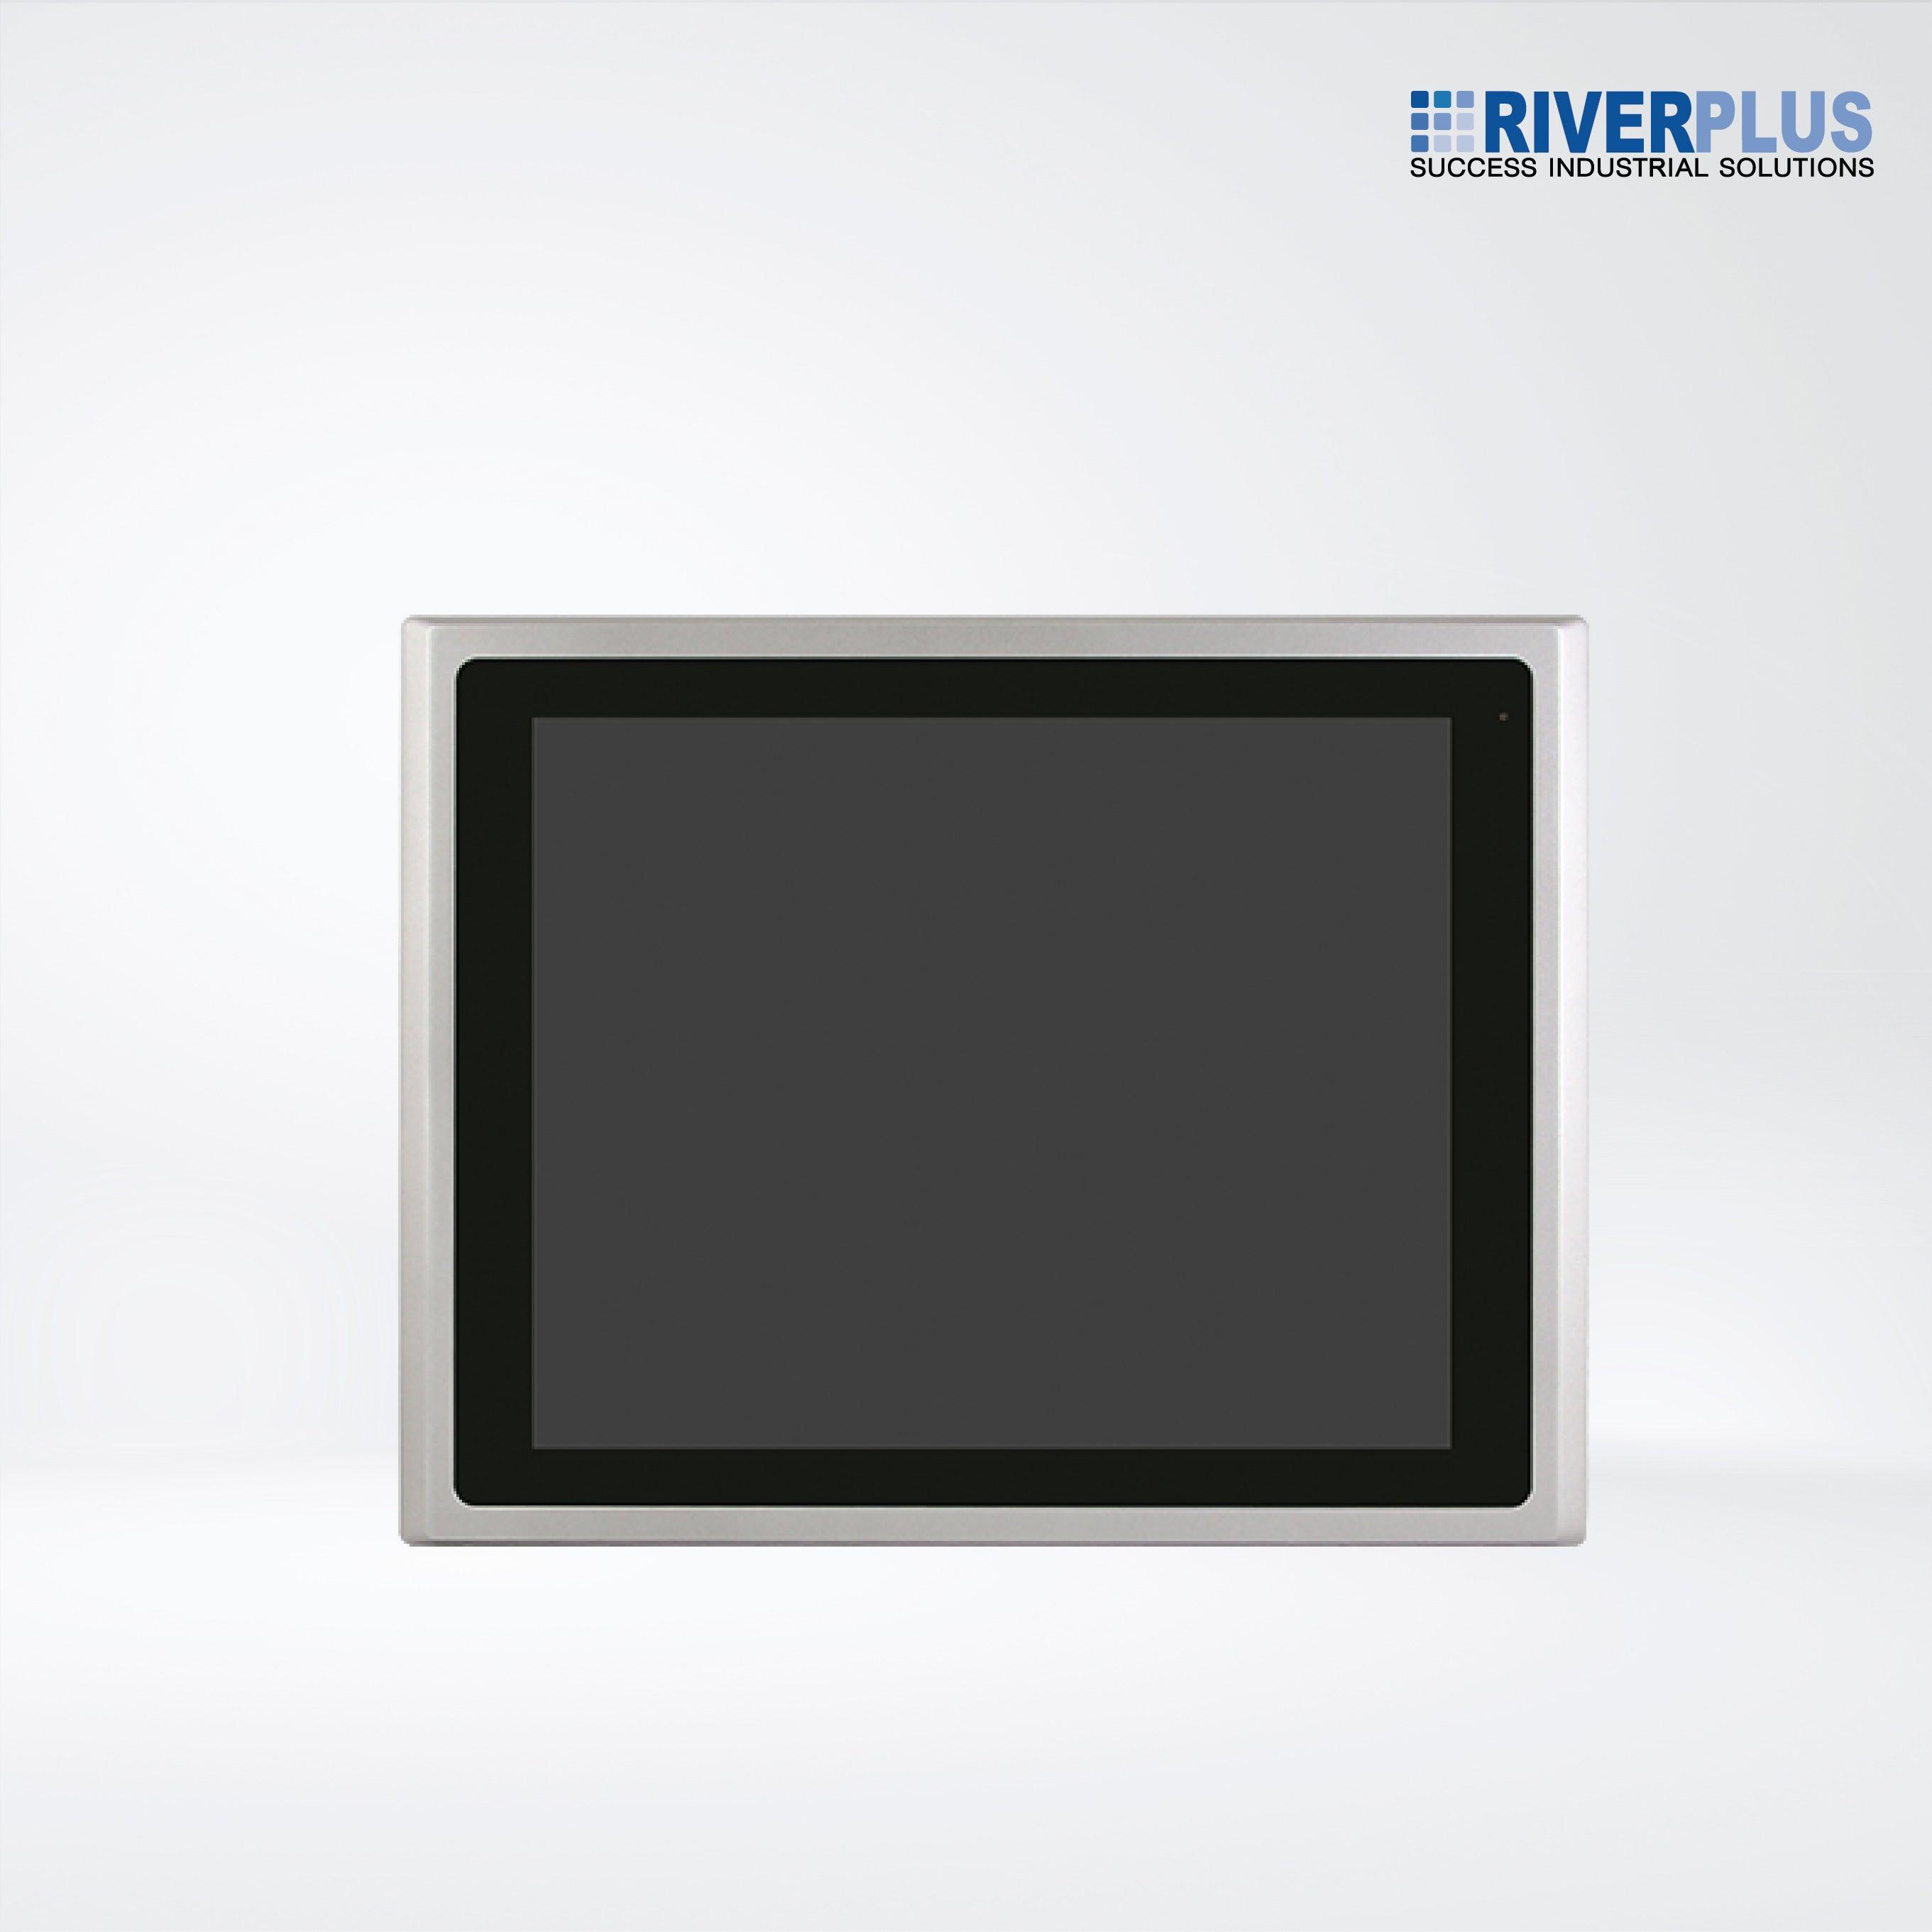 ViPAC-817PH 17” Intel Celeron N2930 Fanless Expandable Panel PC - Riverplus